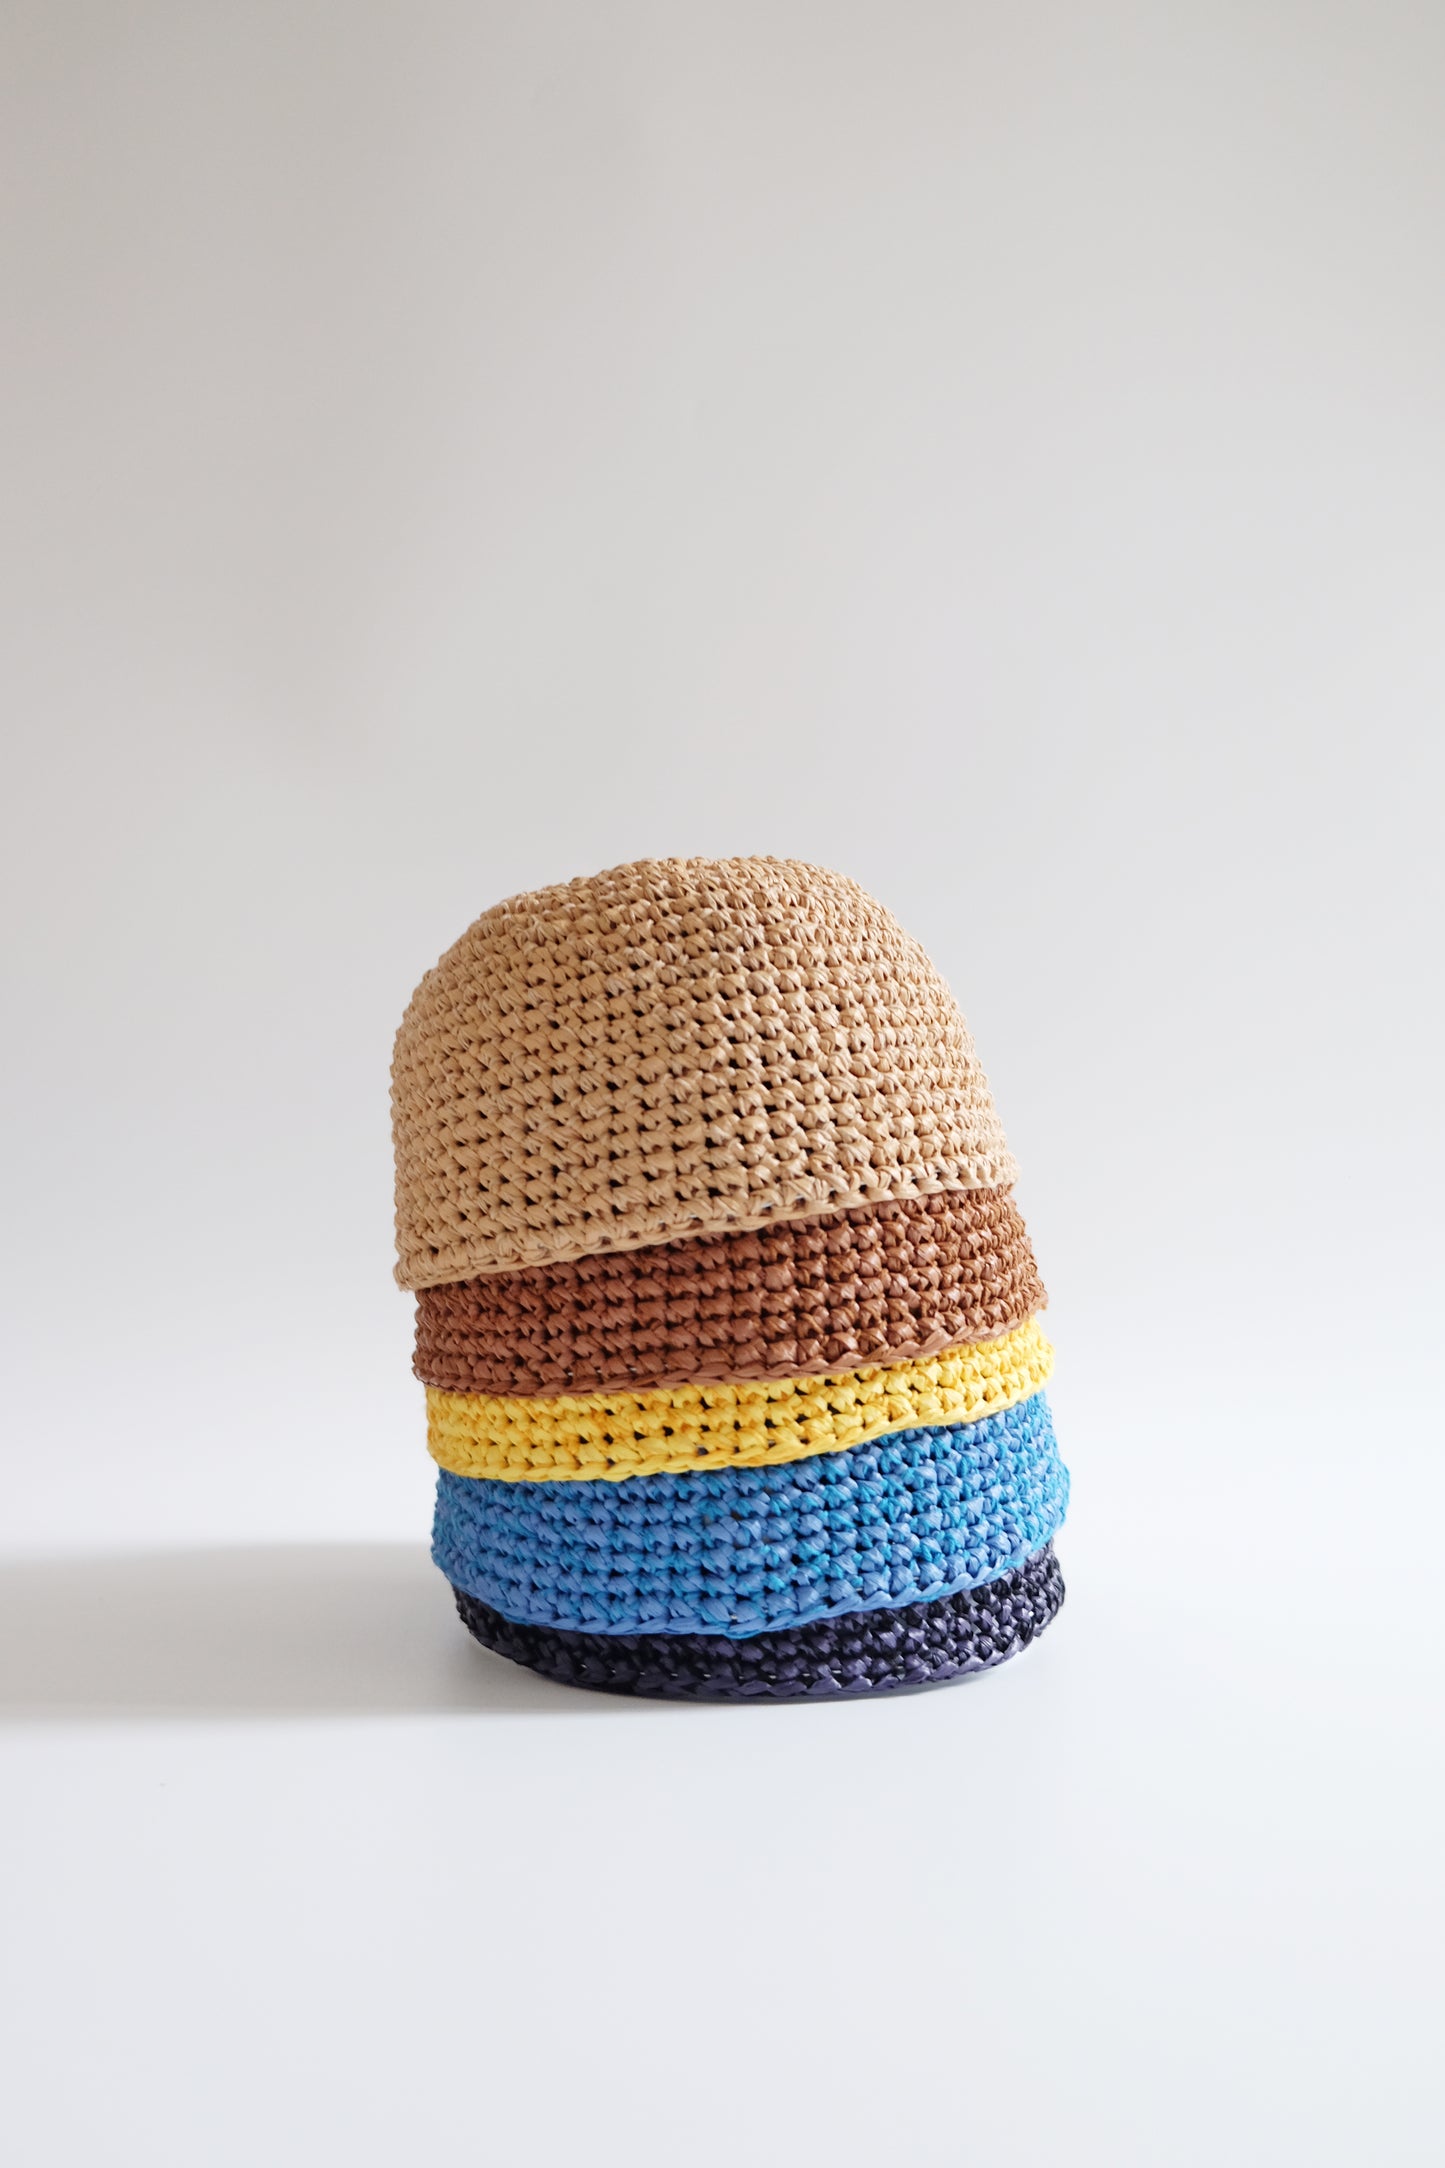 Crochet Baseball Cap Yellow